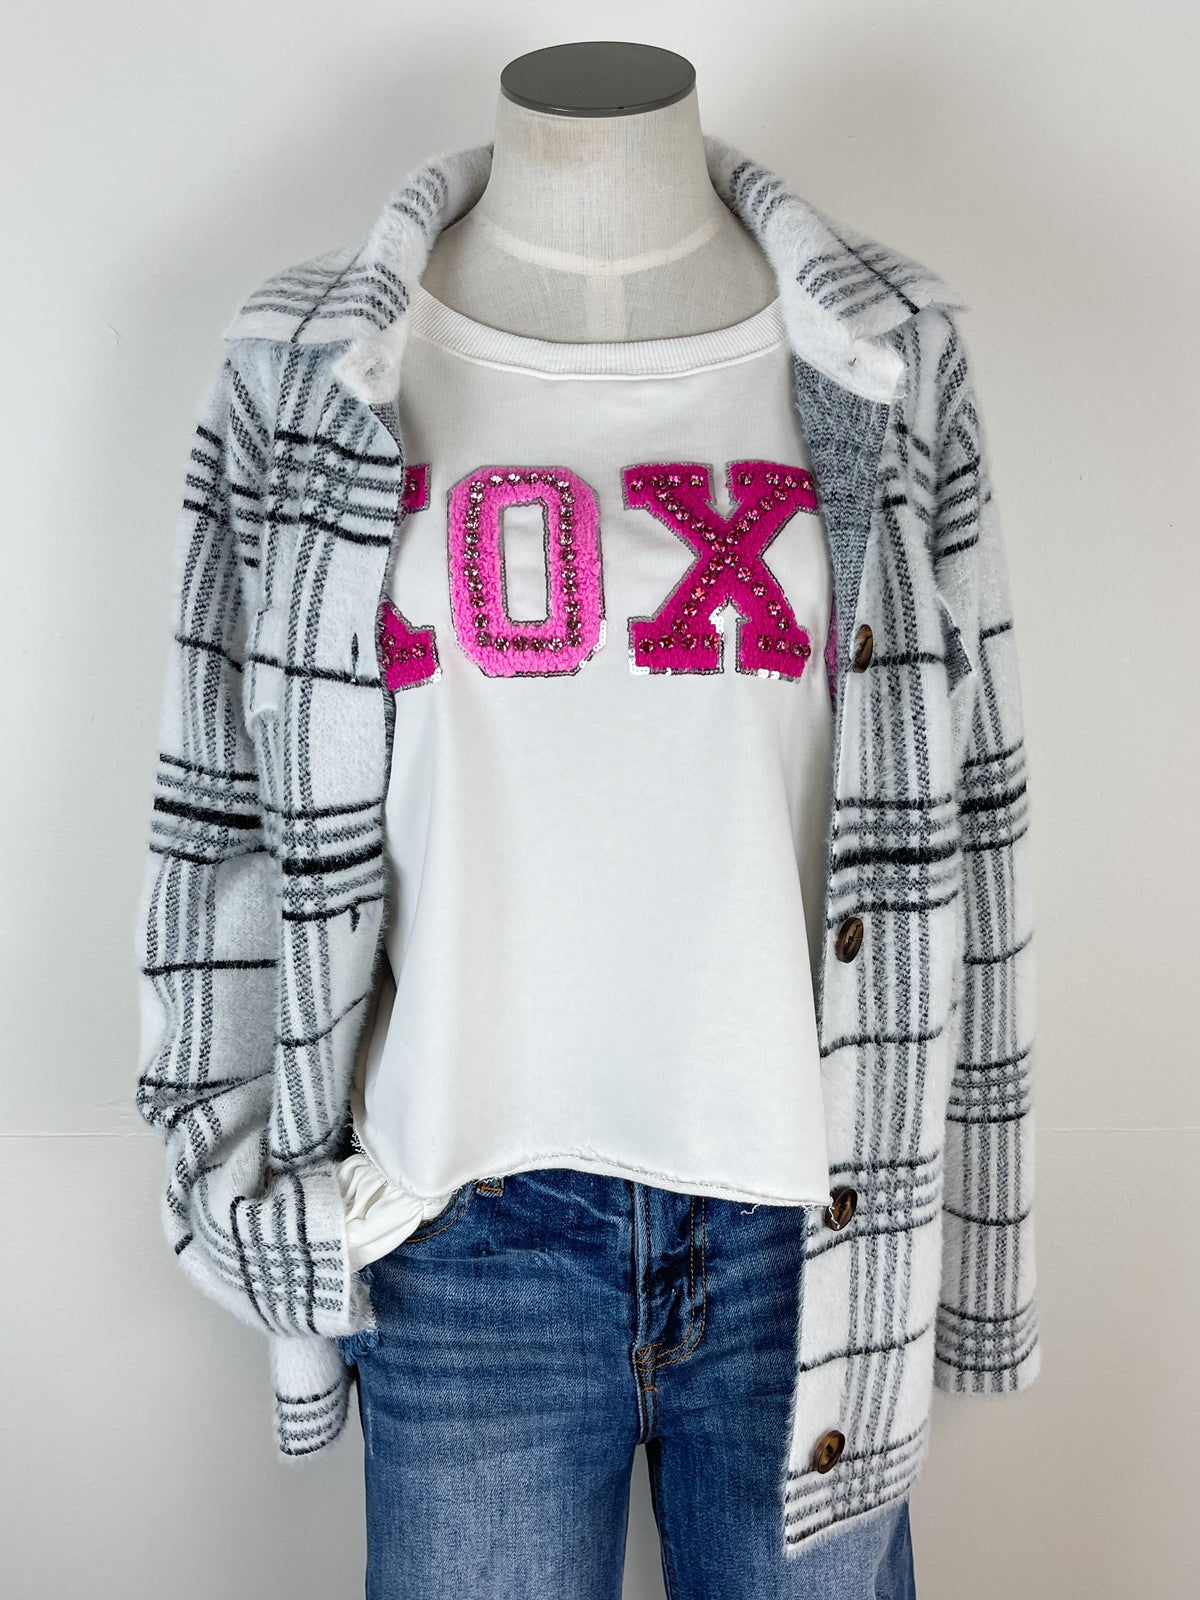 XOXO Cropped Sweatshirt in White